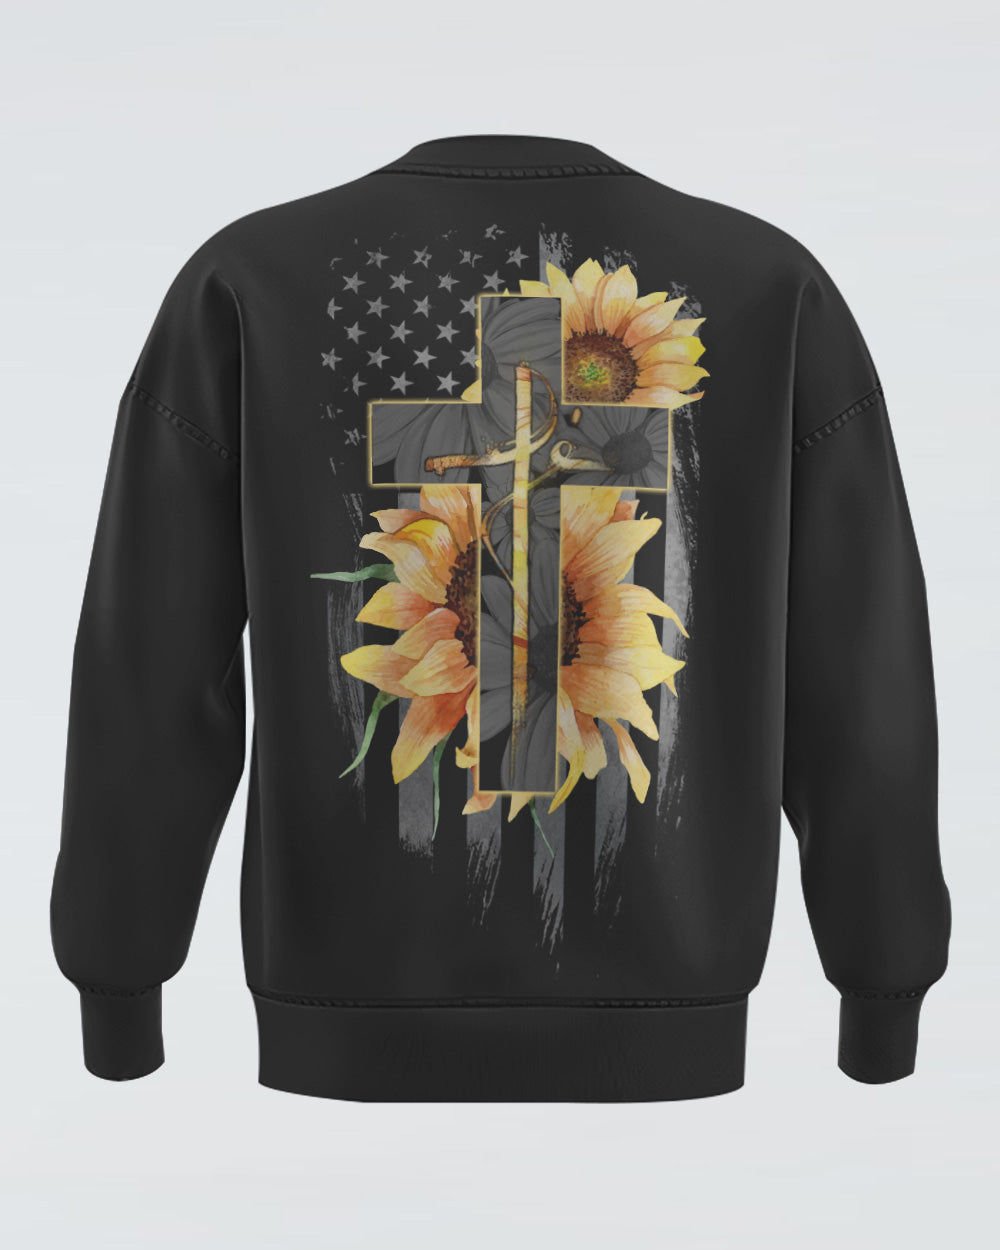 Fé Sunflower Cross American Flag Women's Christian Sweatshirt